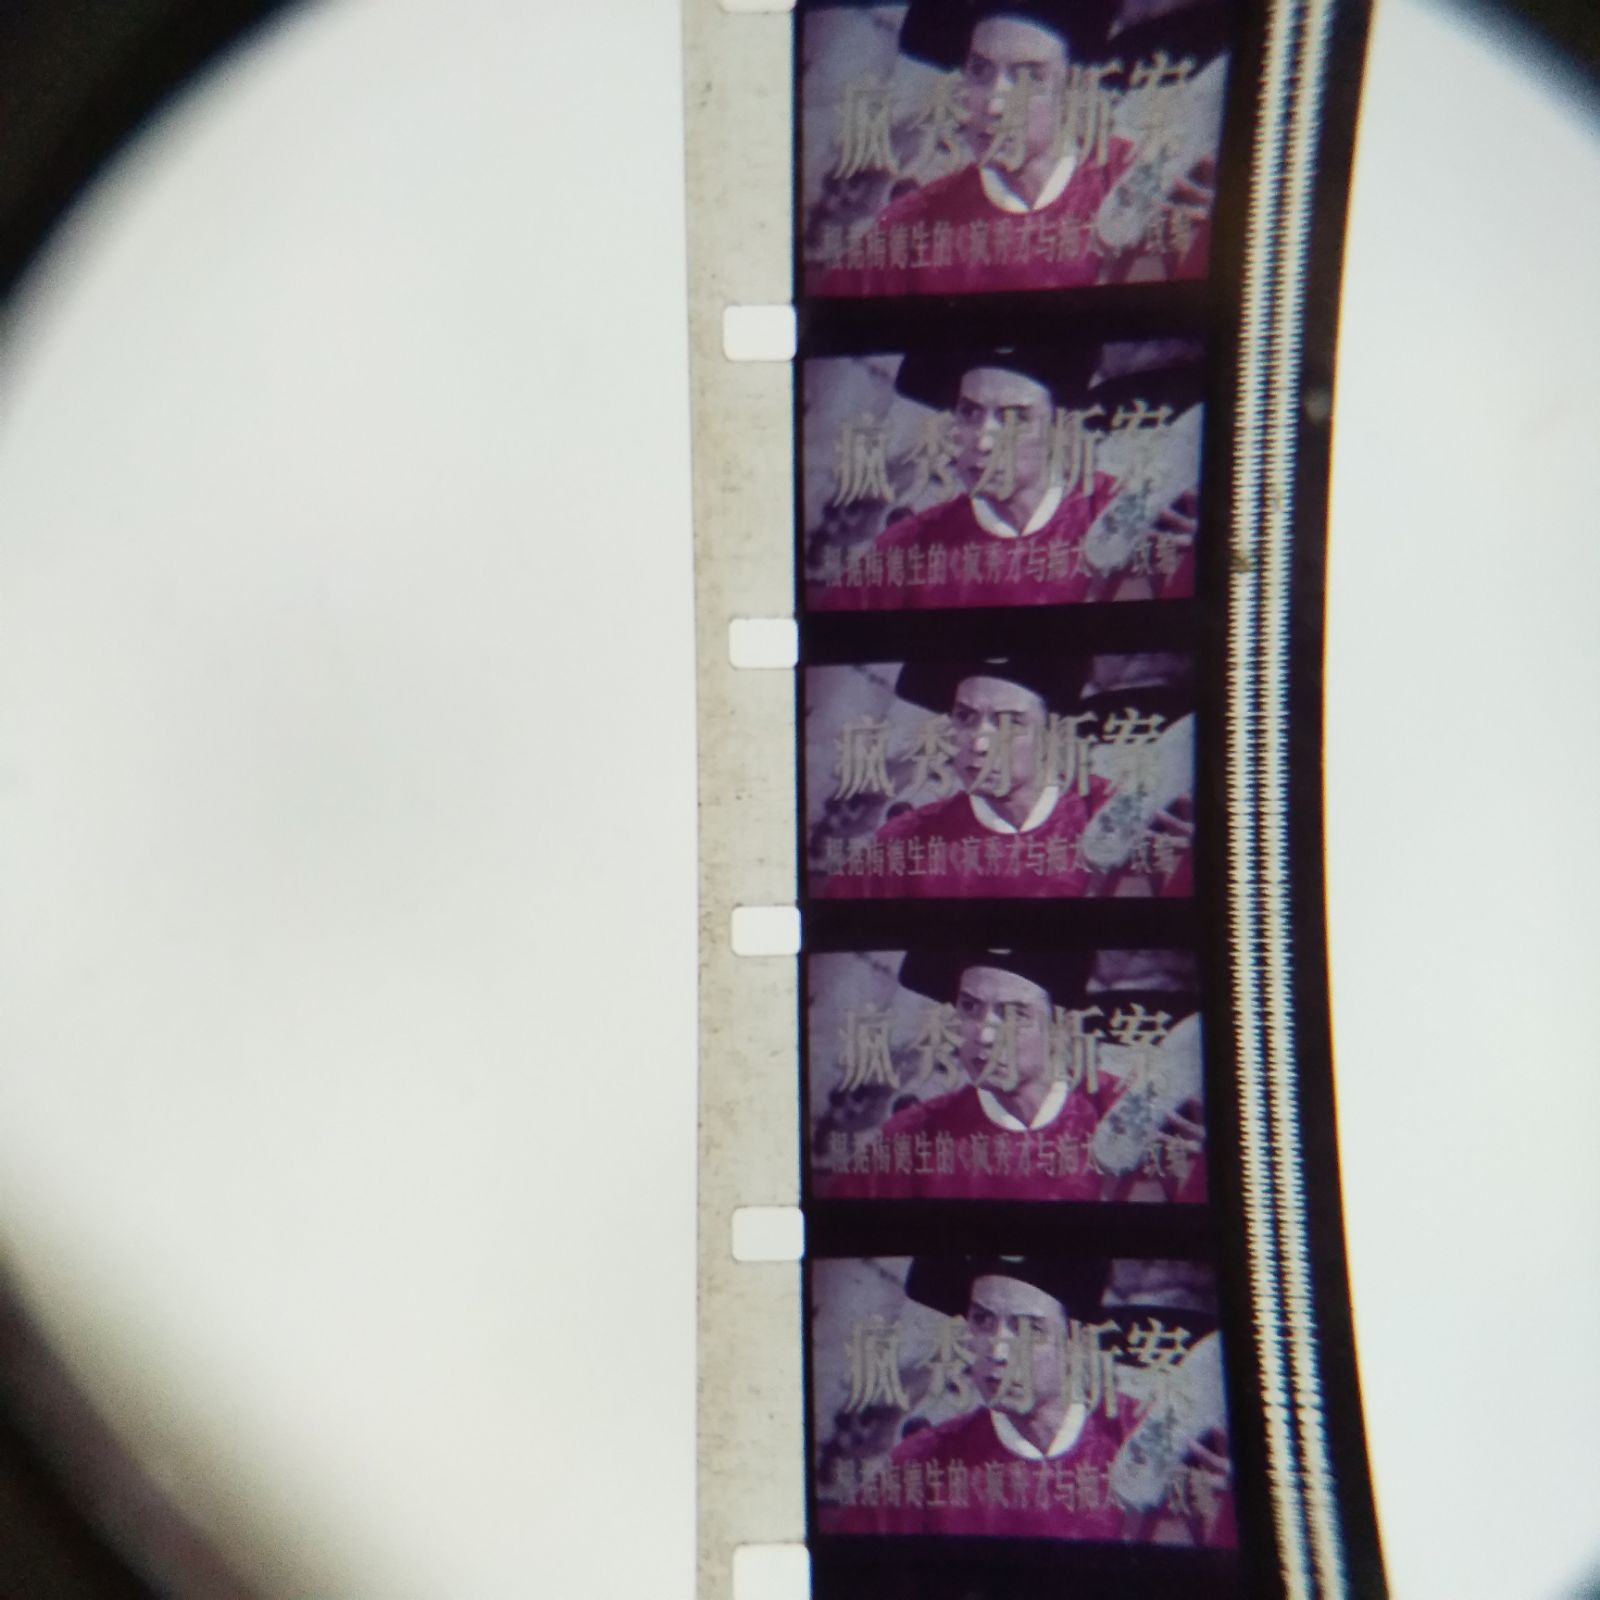 16mm old movie screening copy old-fashioned movie machine negatives